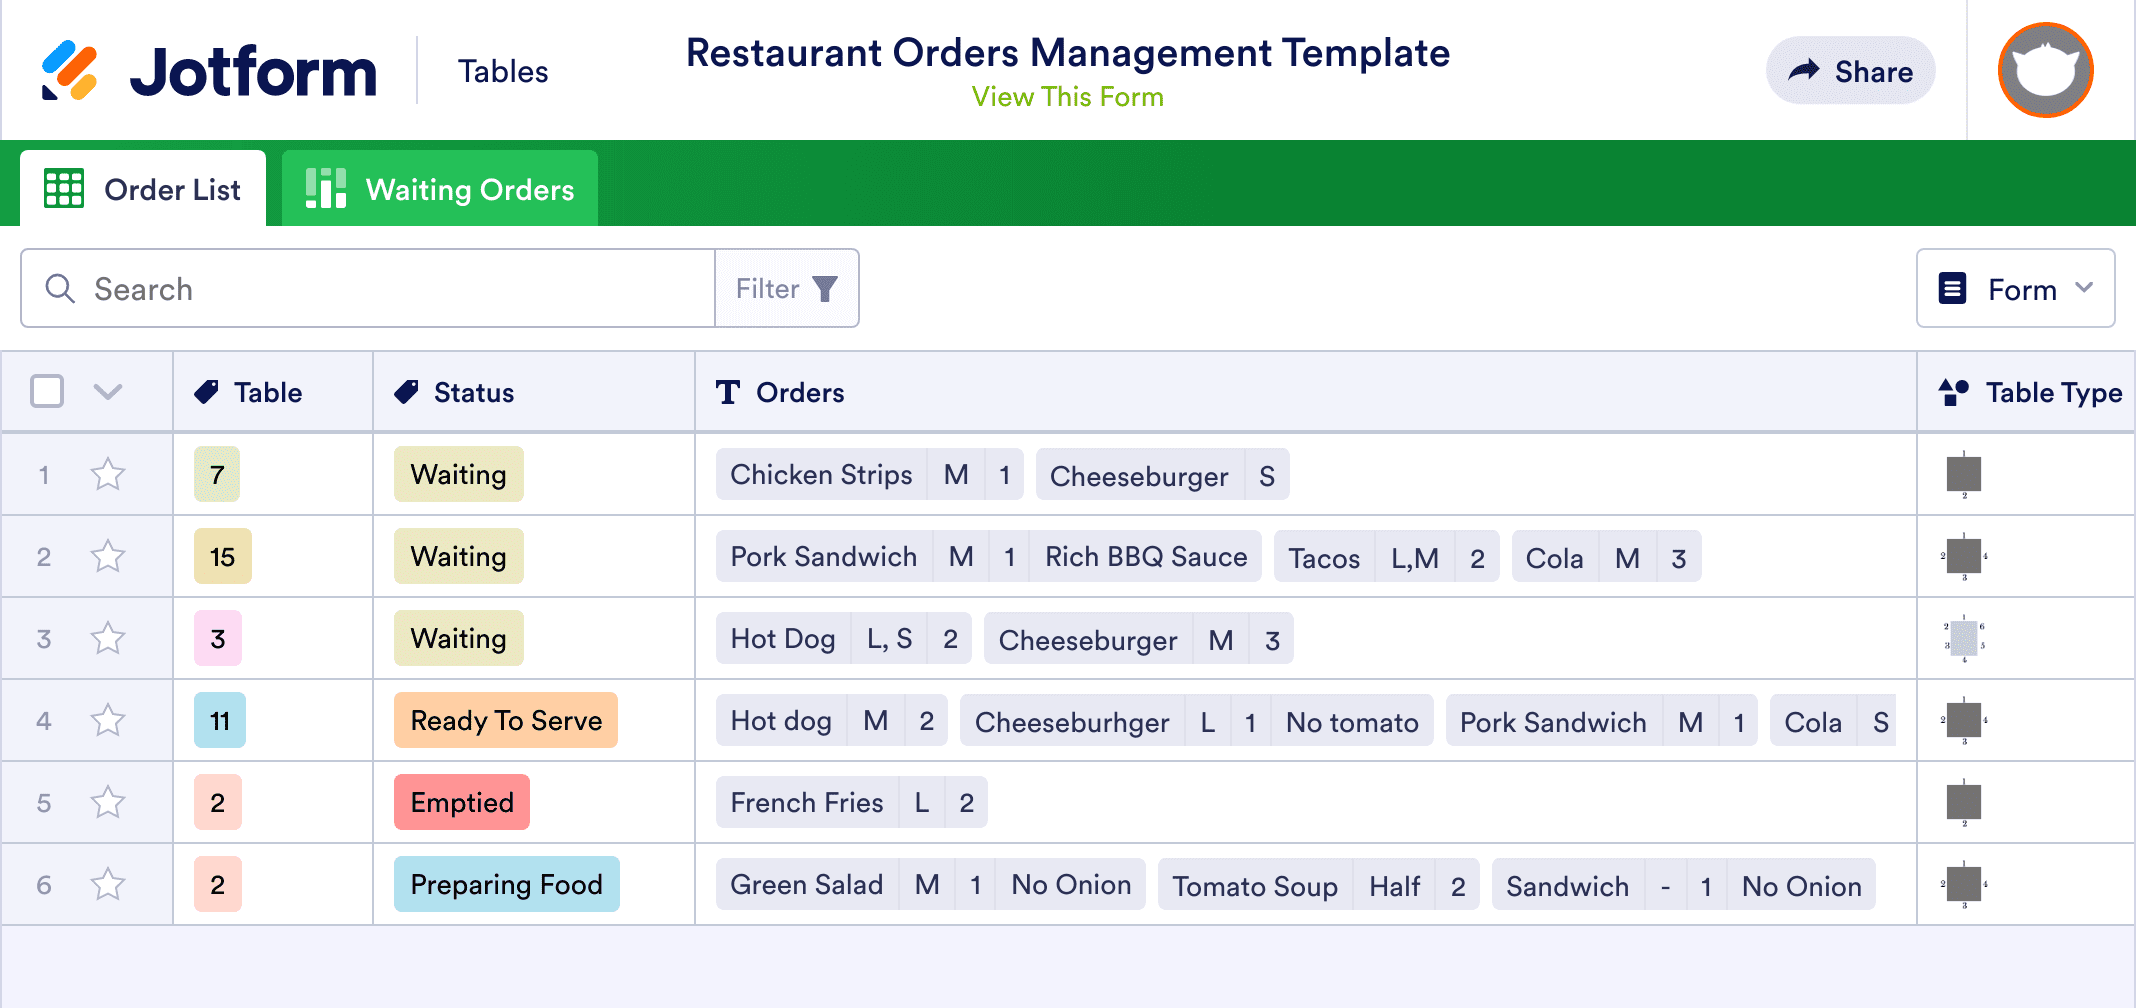 Restaurant Orders Management Template